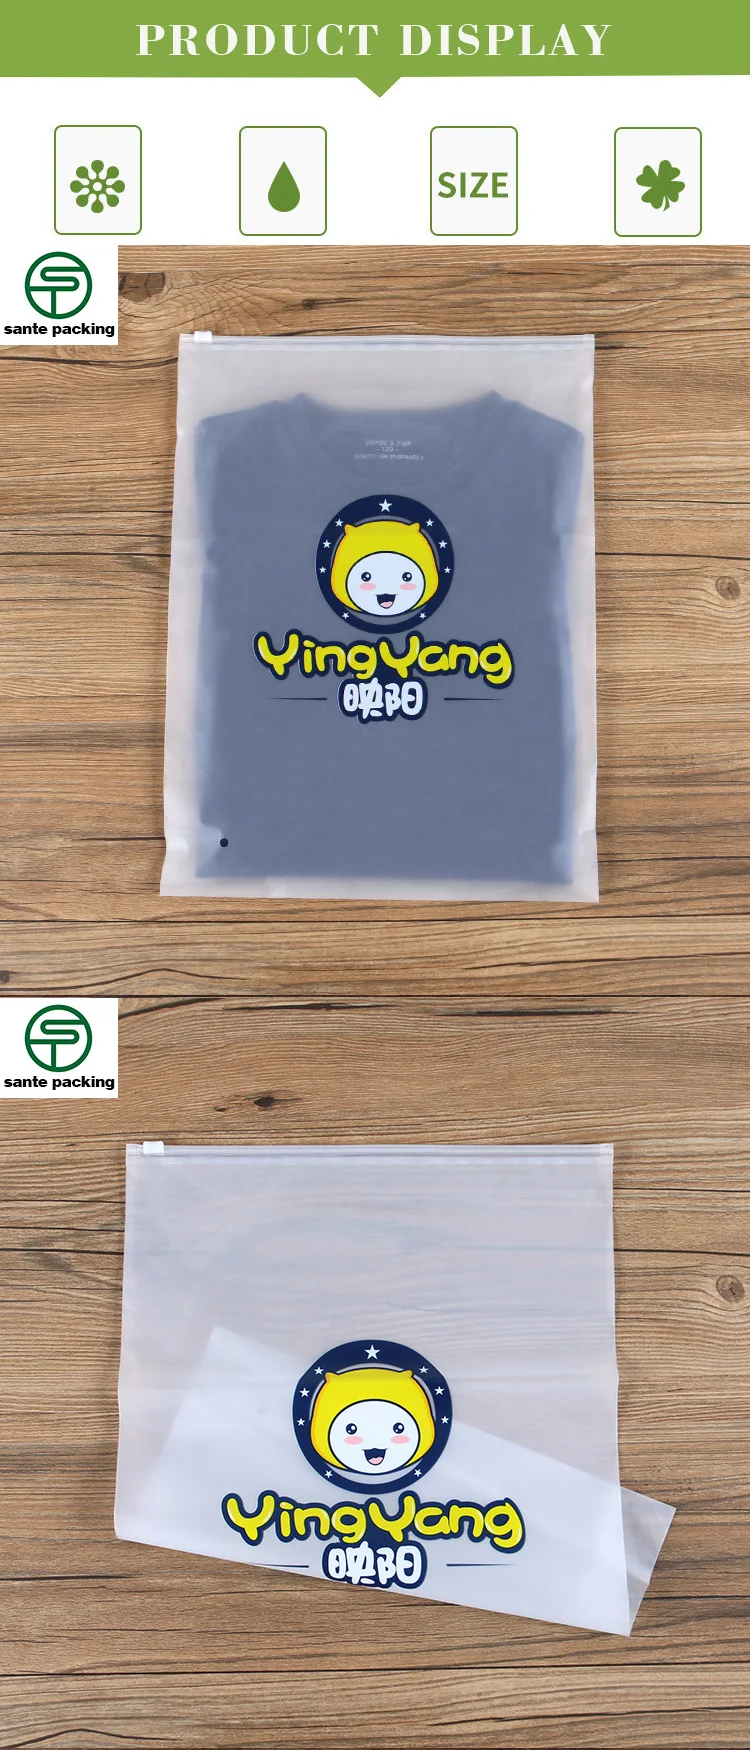 8 X 12 Inches Polyethylene Burp Cloths Zip Packaging Bags Wholesale High Quality Zipper Bags